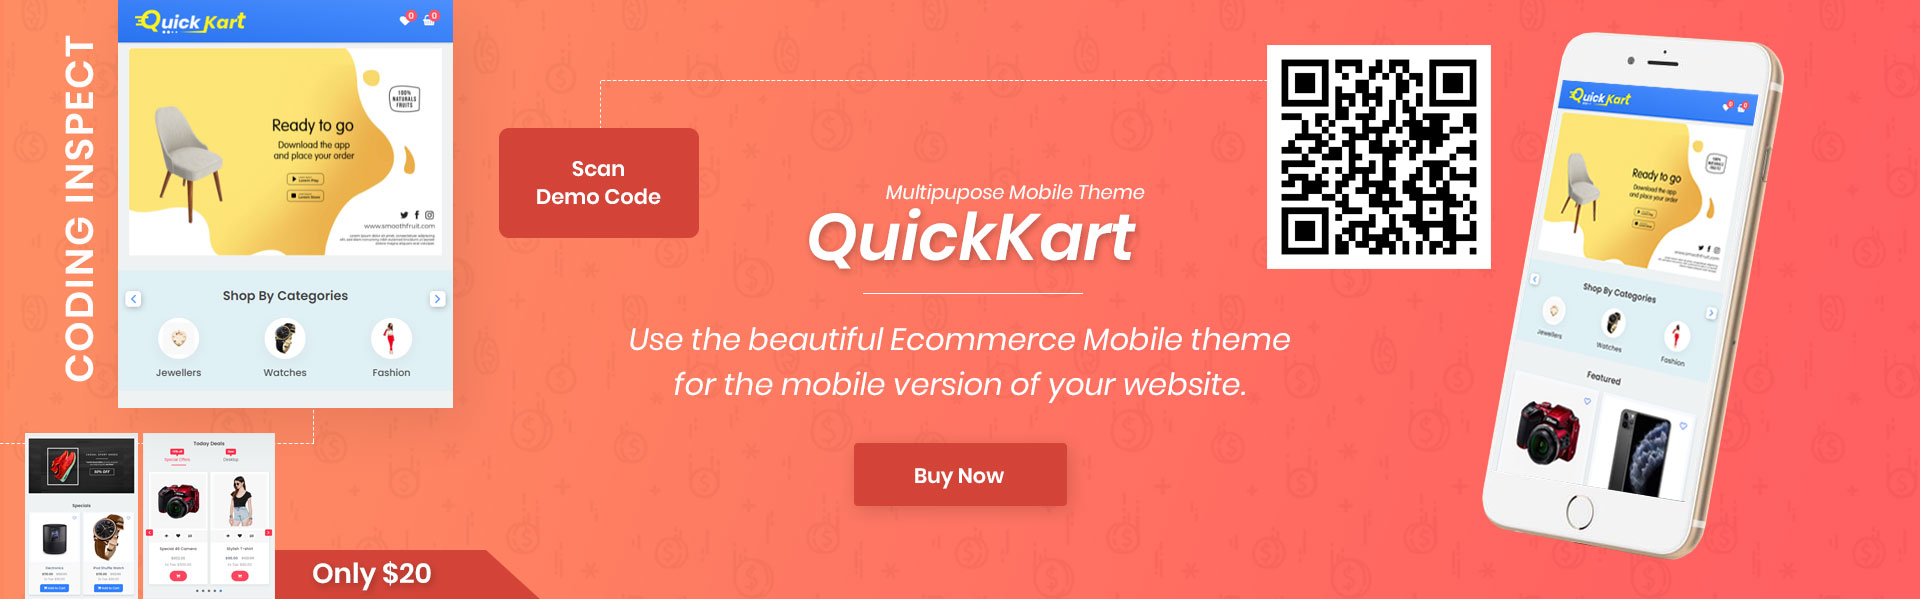 QuickKart Mobile Mulipurpose Theme 